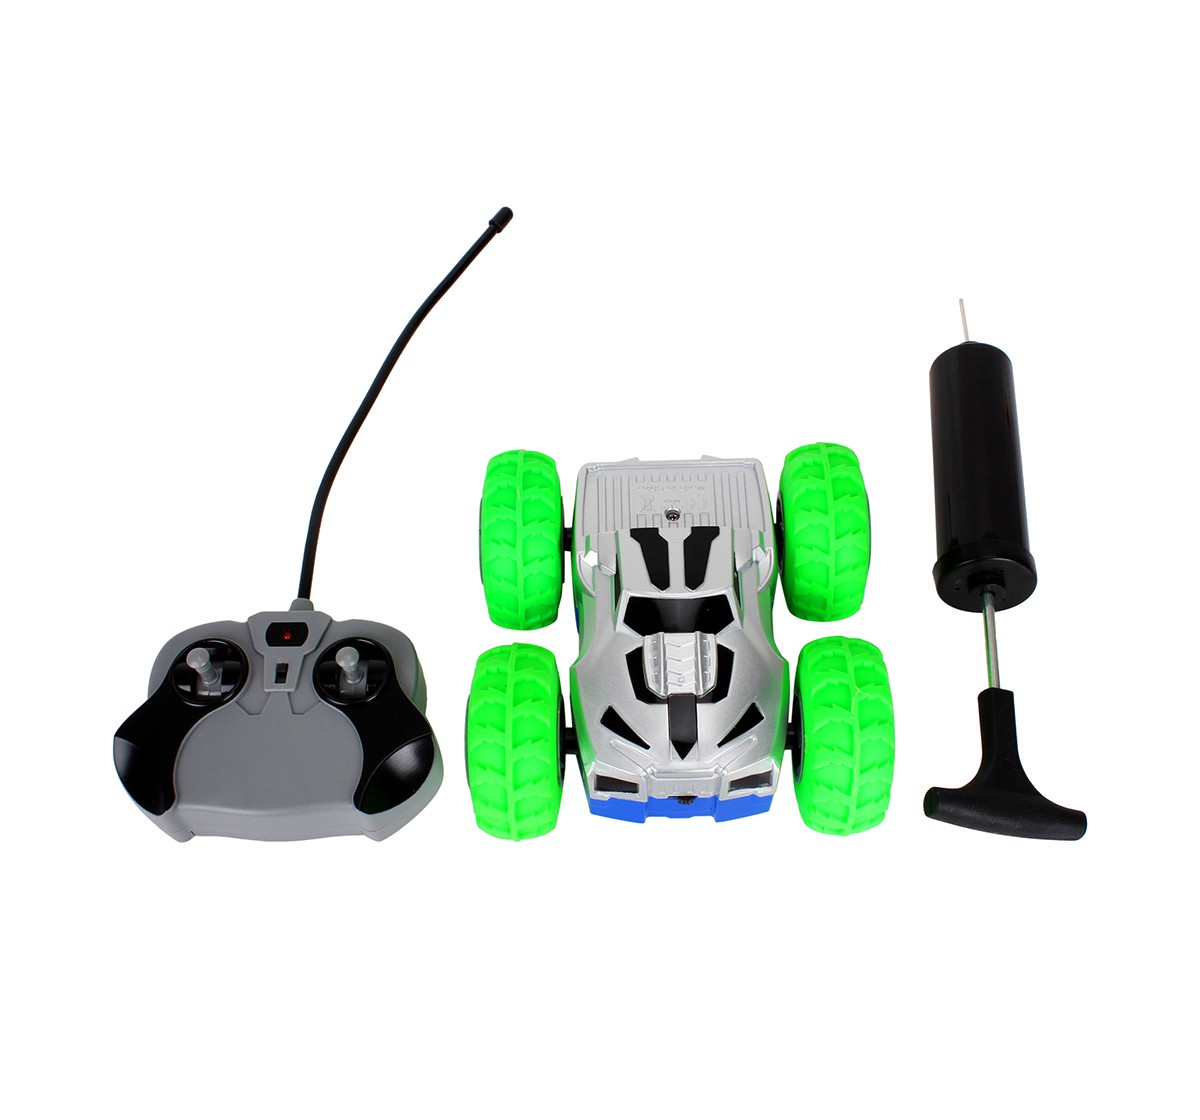 Yinrun Karmax Double Side Tornado- Radio Control Remote Control Toys for Kids age 6Y+ 